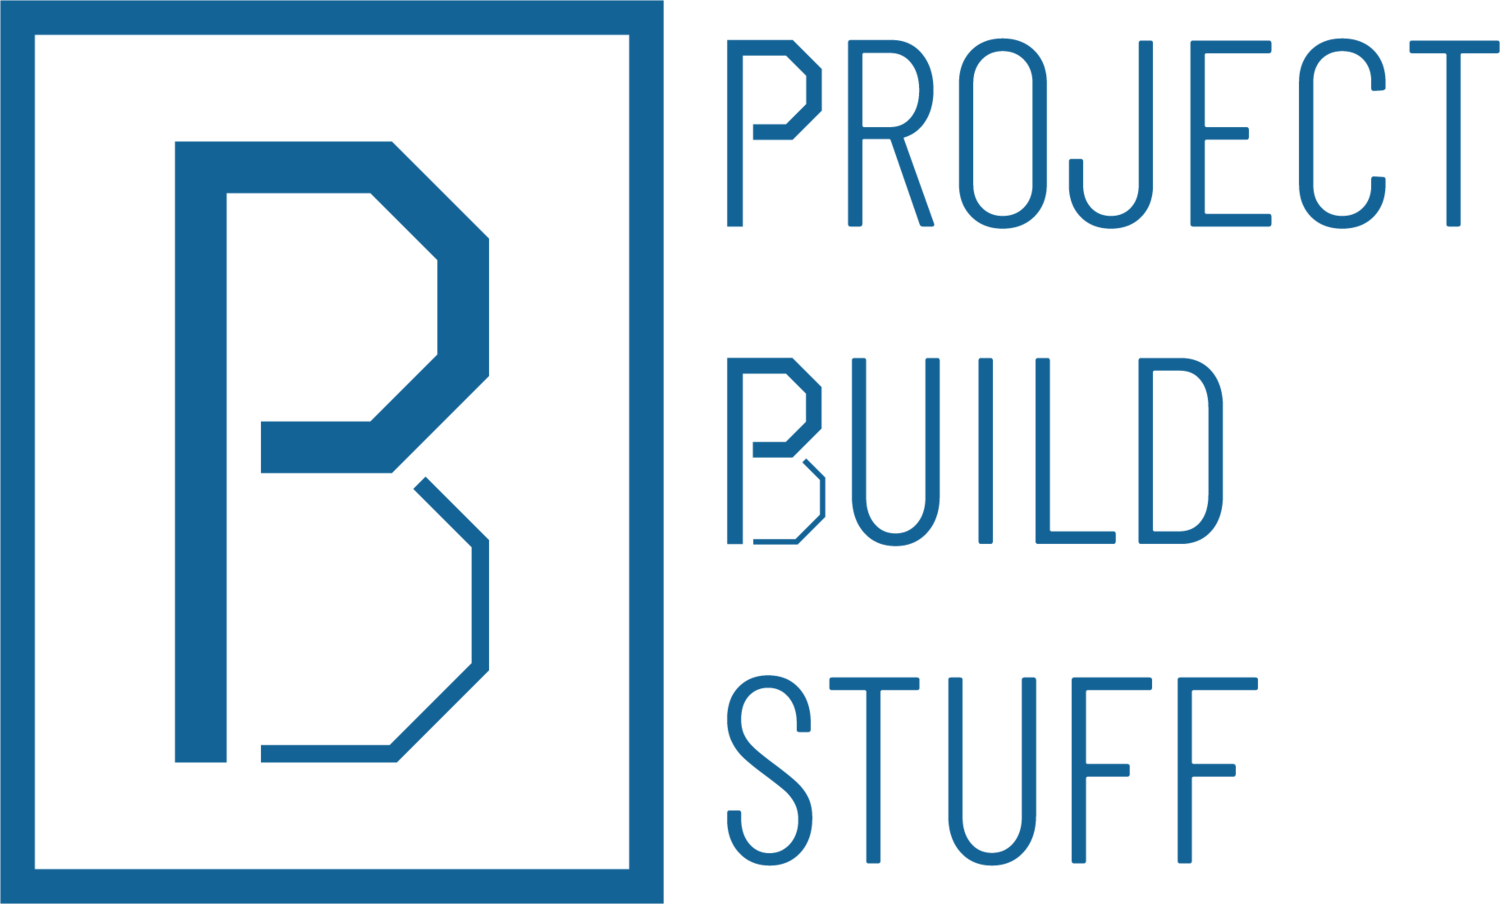 Project Build Stuff